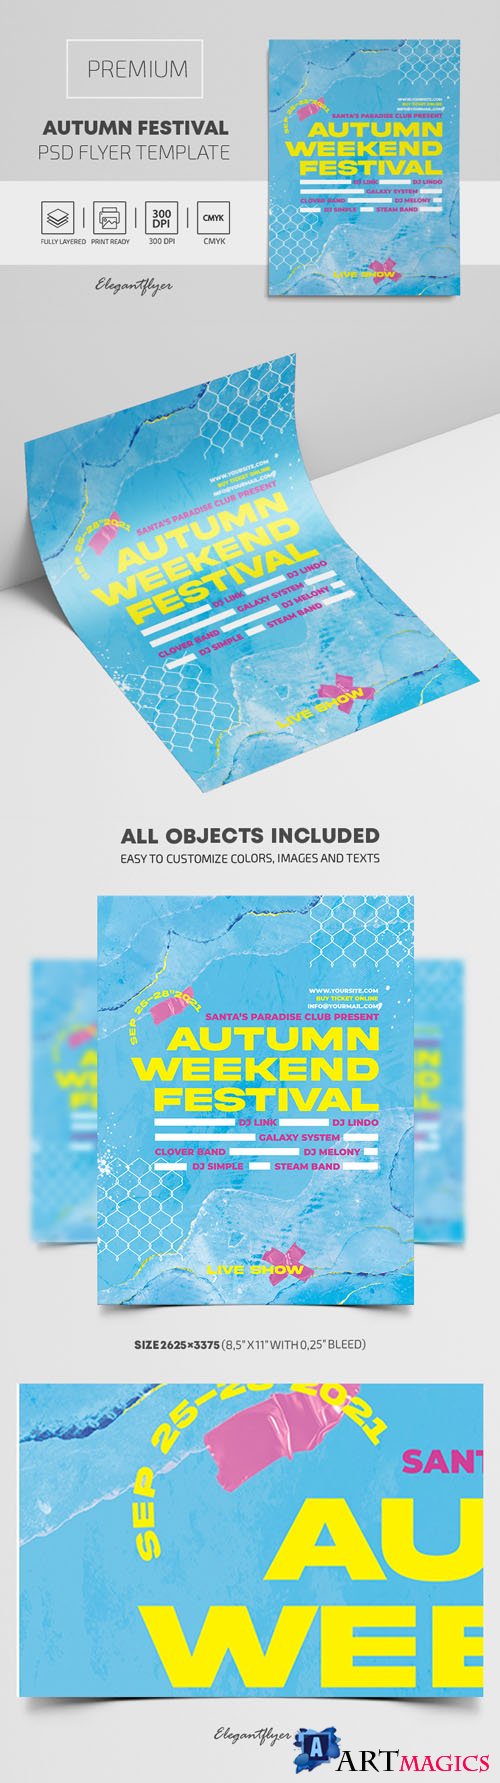 Autumn Festival Premium PSD Flyer Template